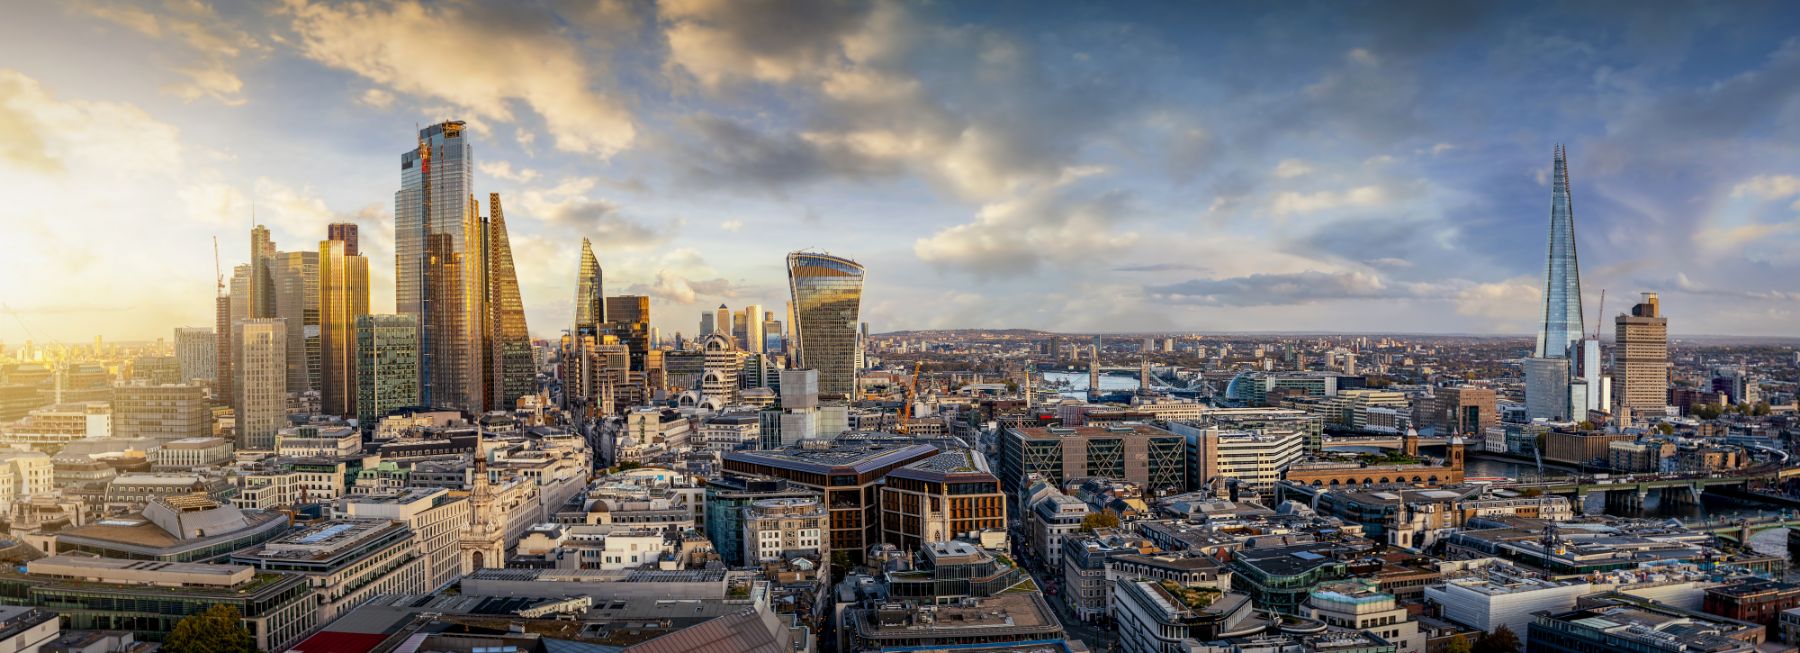 London  cityscape